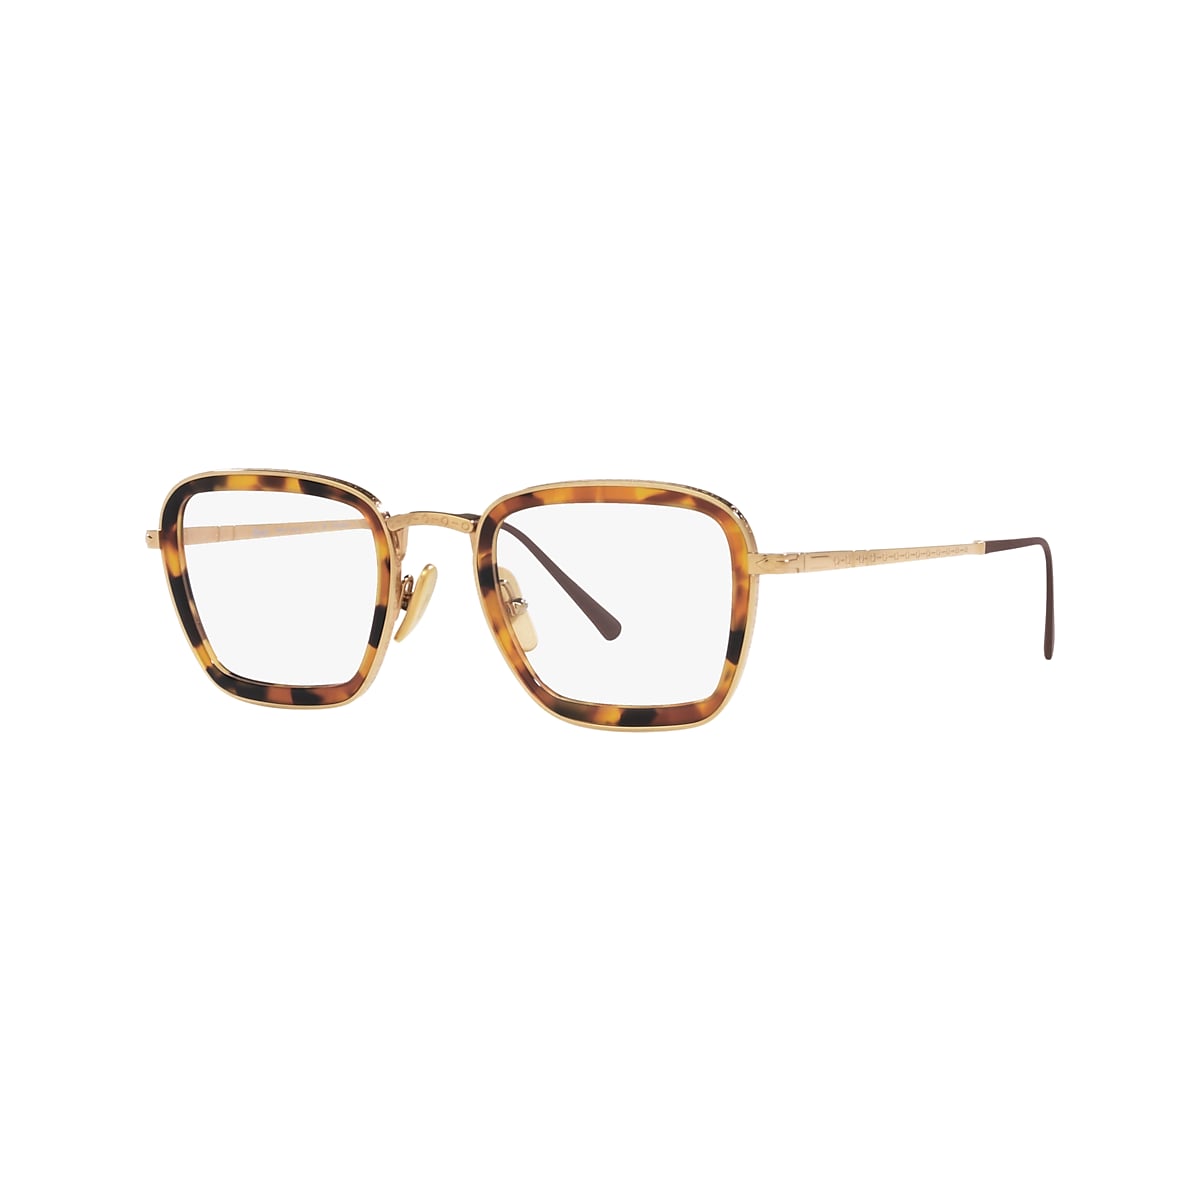 Persol PO5011VT Eyeglasses in Gold